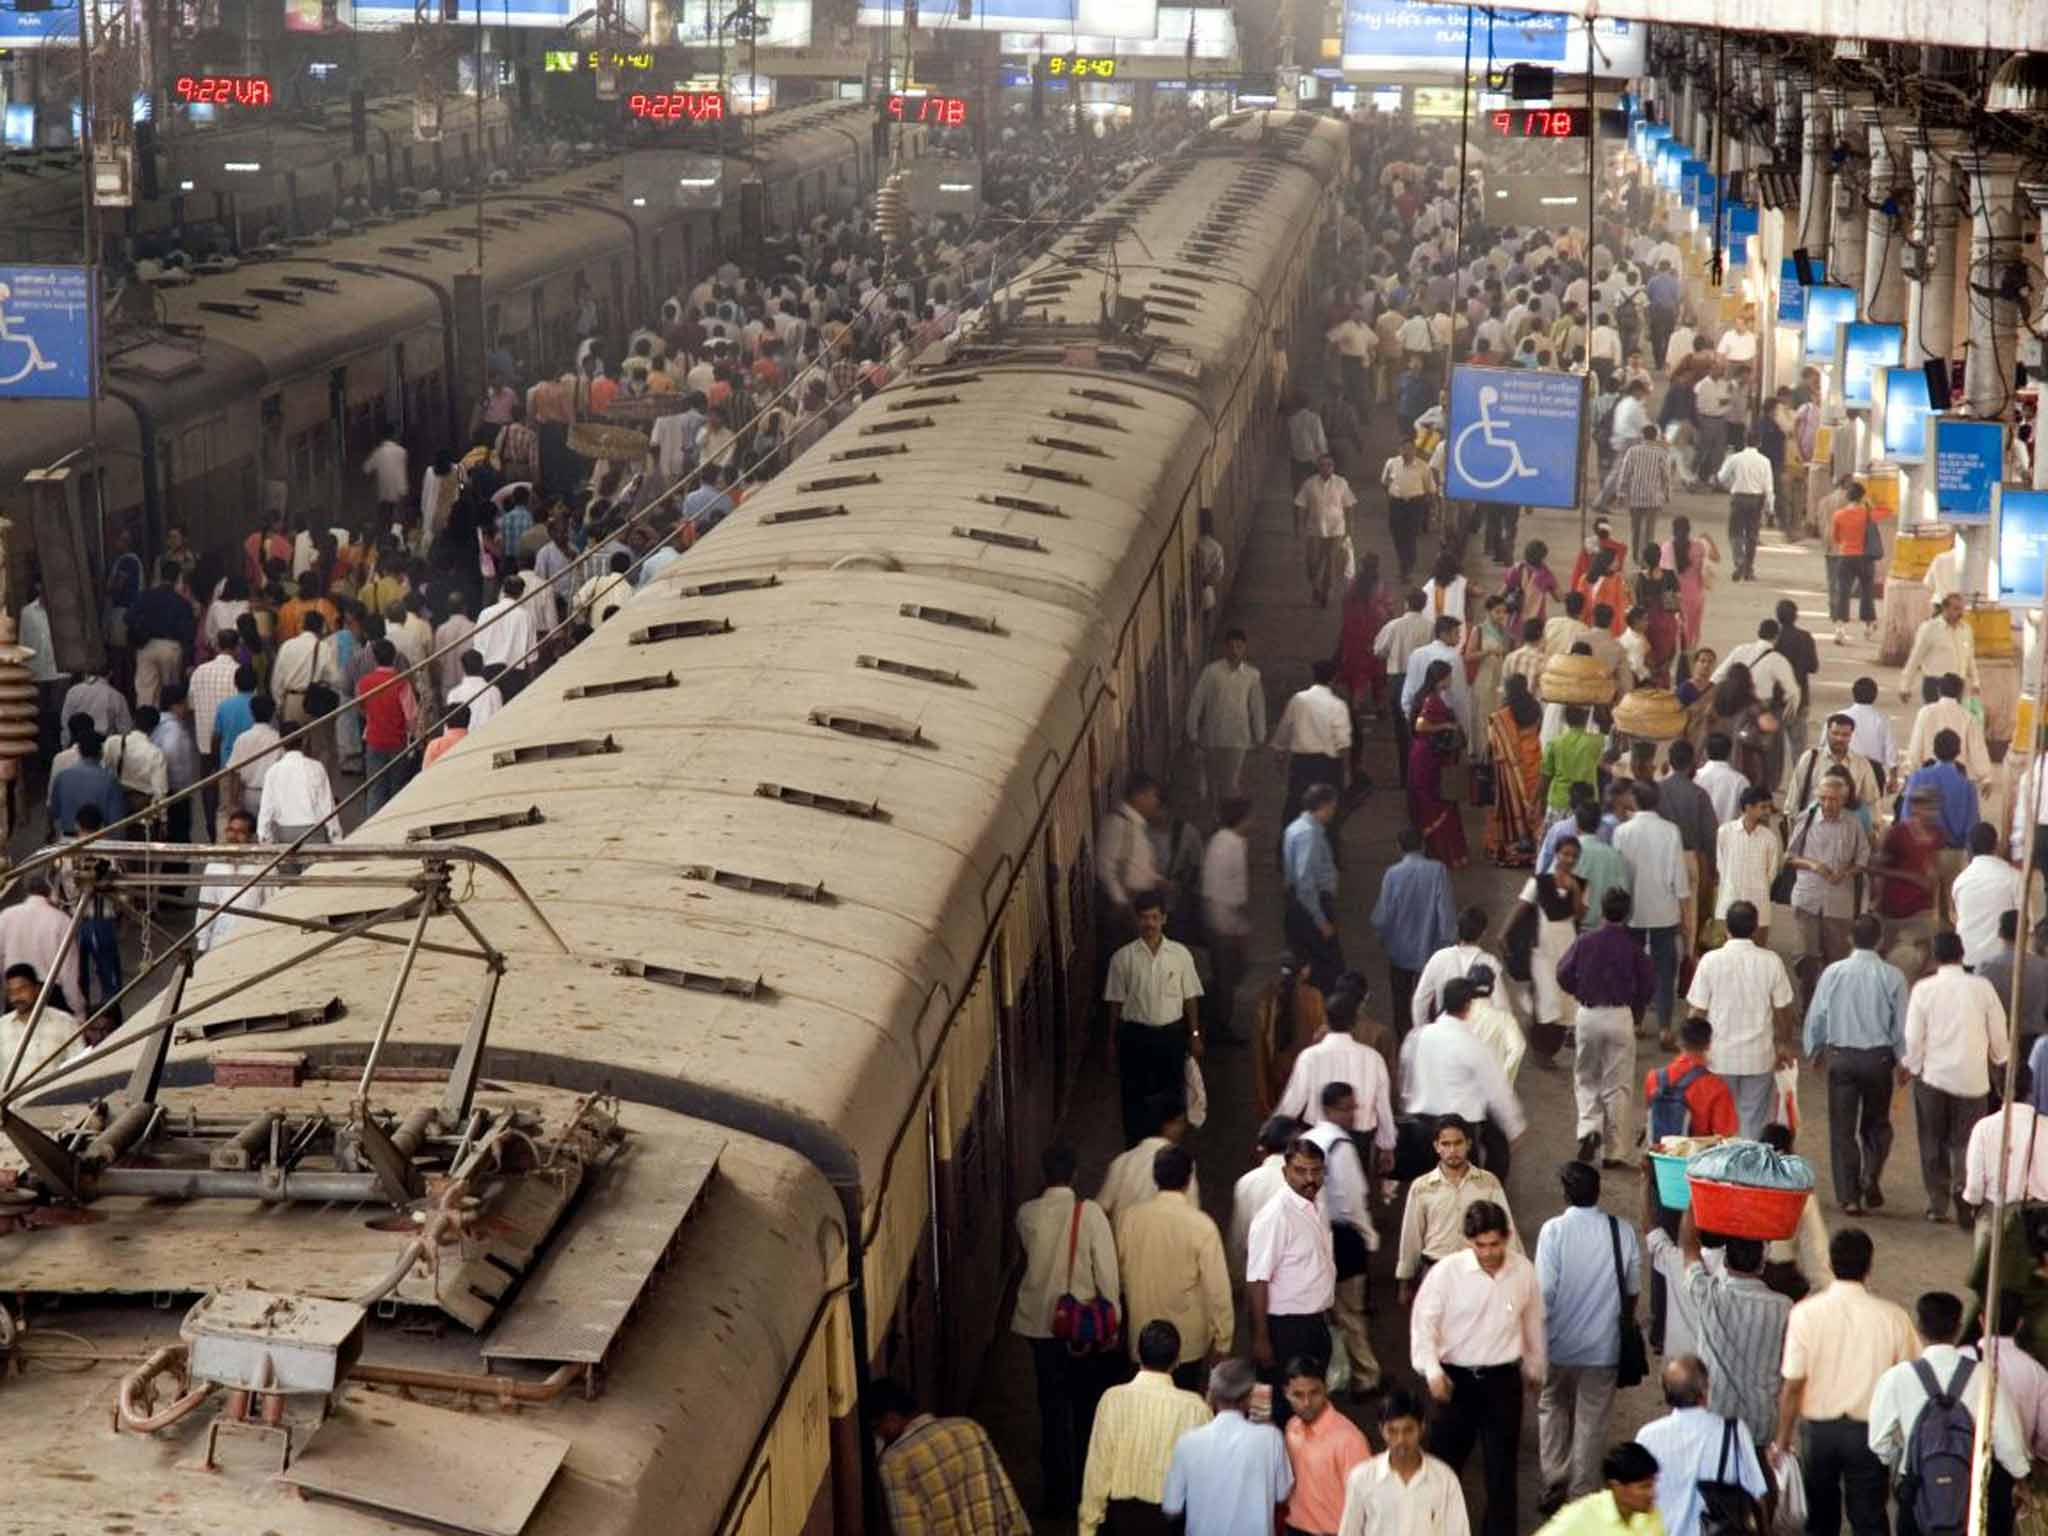 Mumbai's Chhatrapati Shivaji Terminus is one of the world's busiest train stations